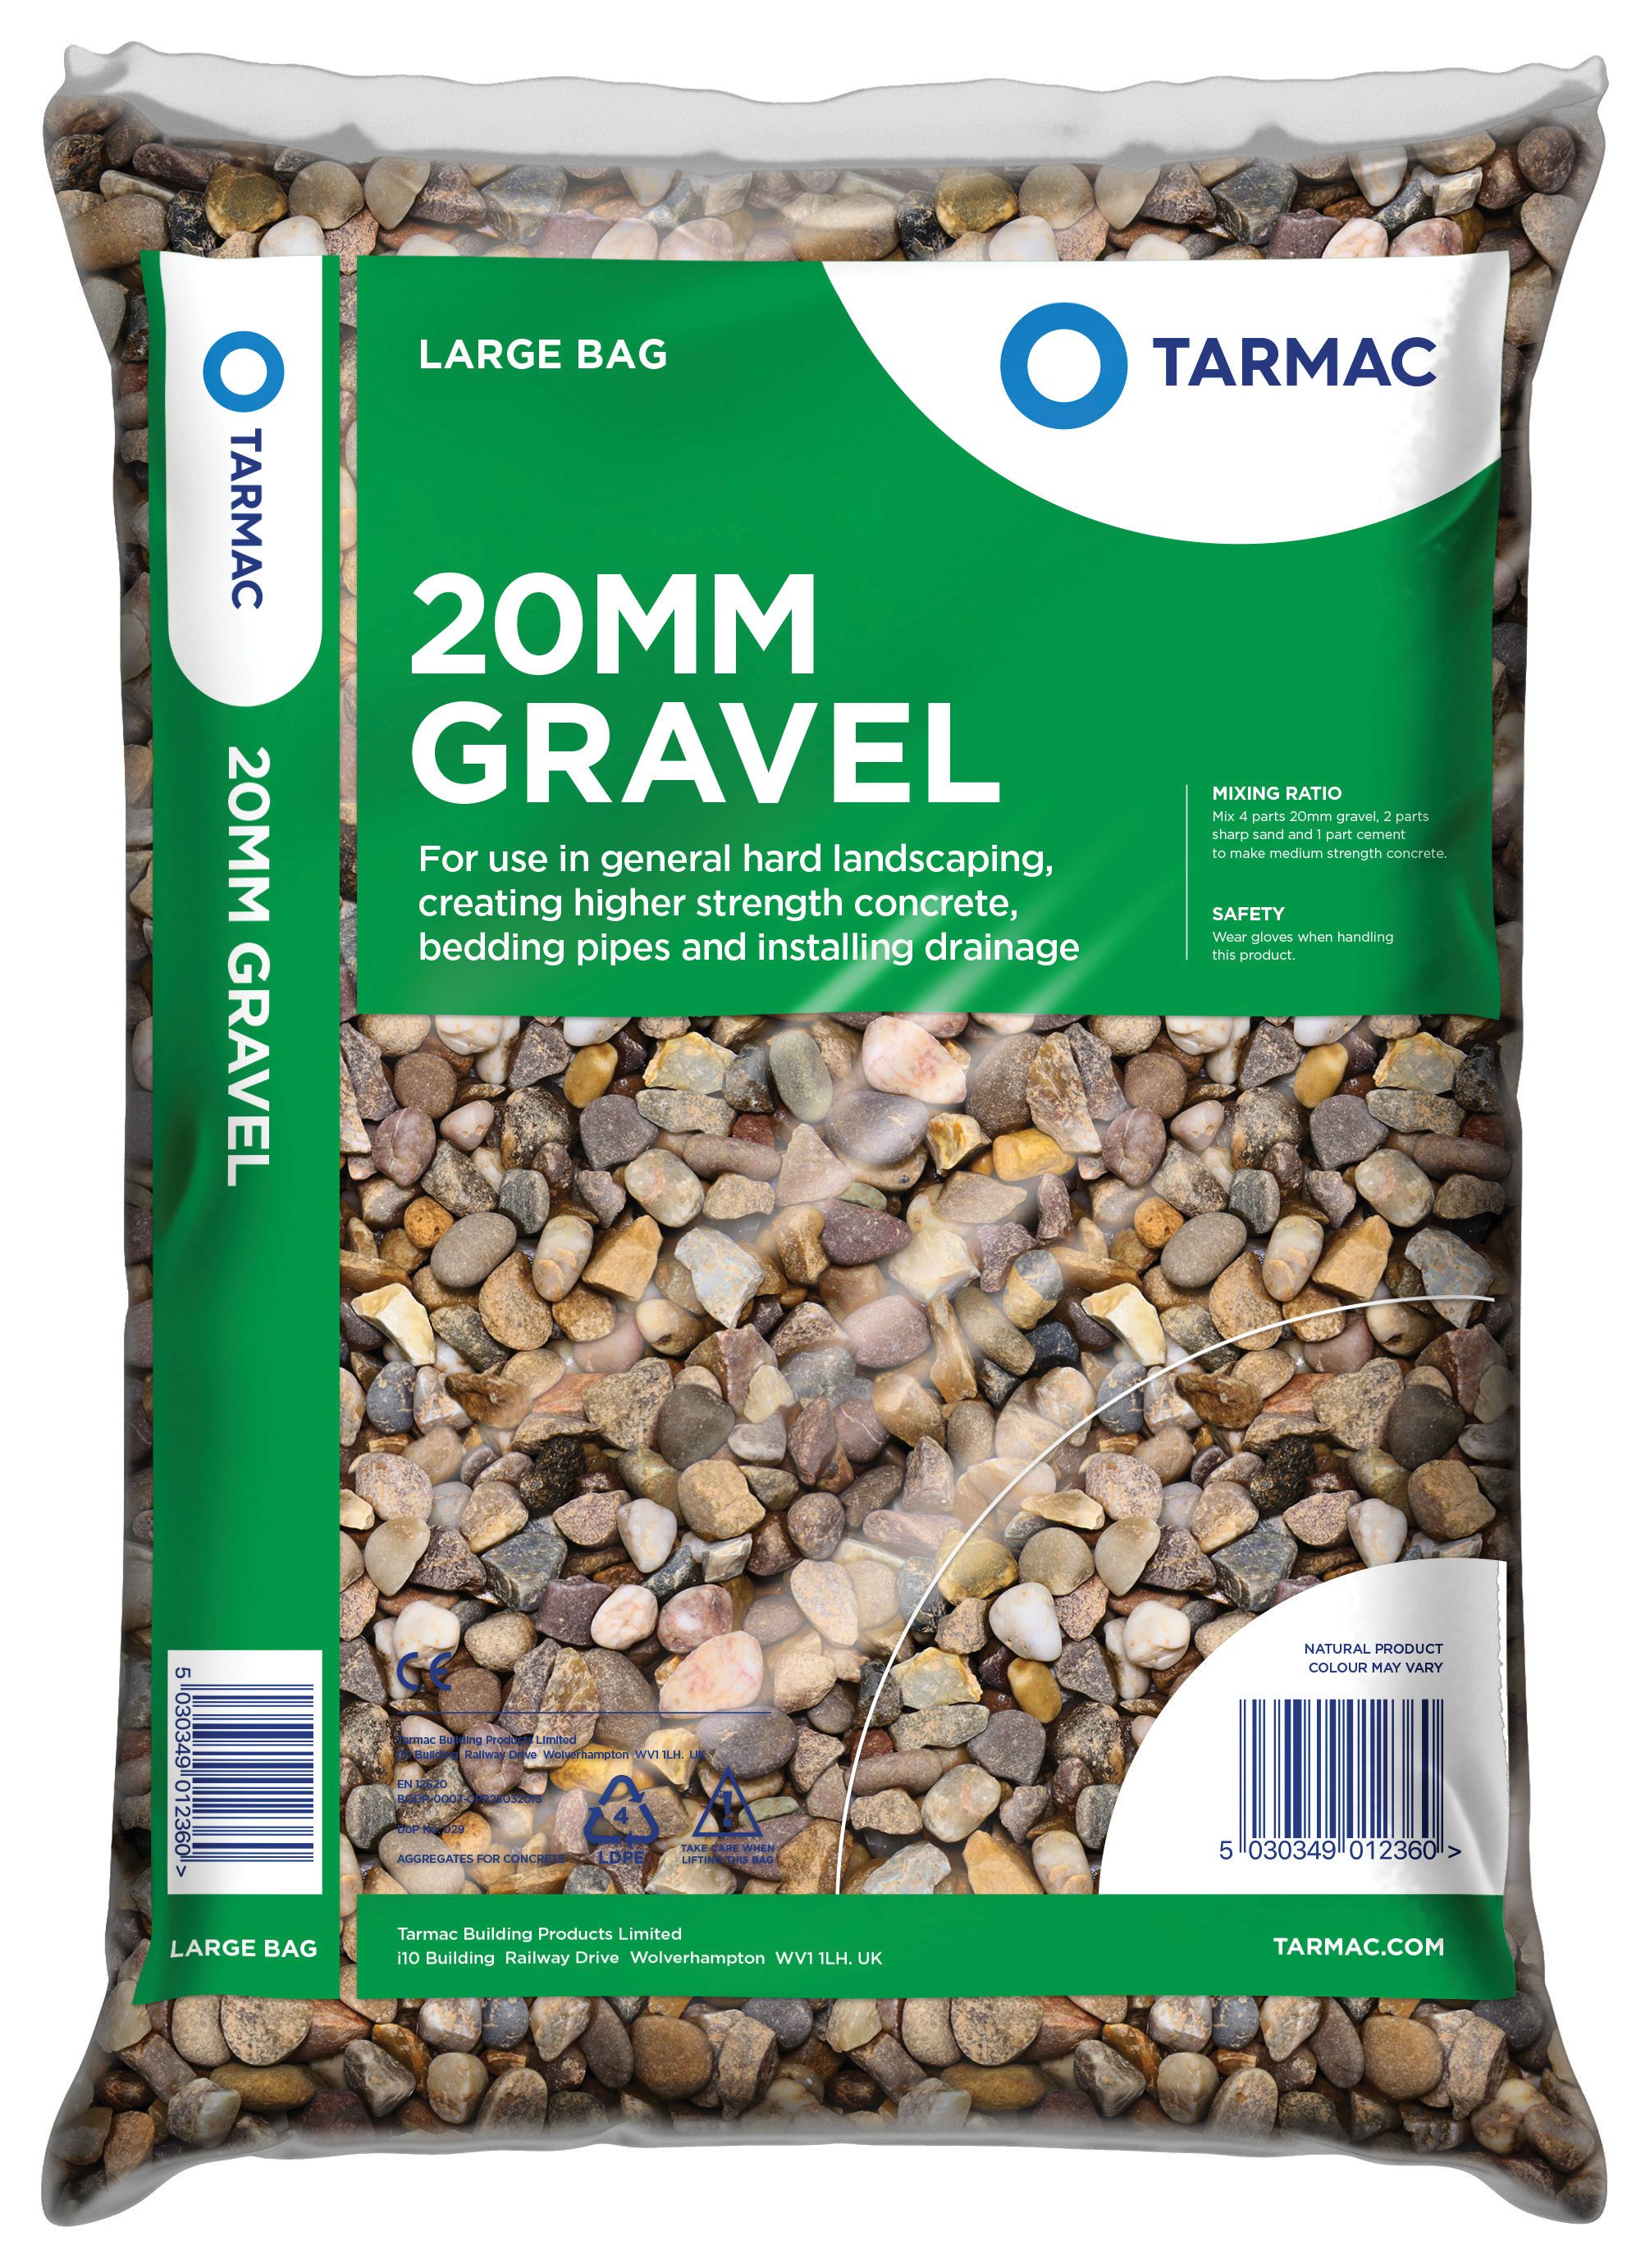 Tarmac 20mm Gravel - Major Bag